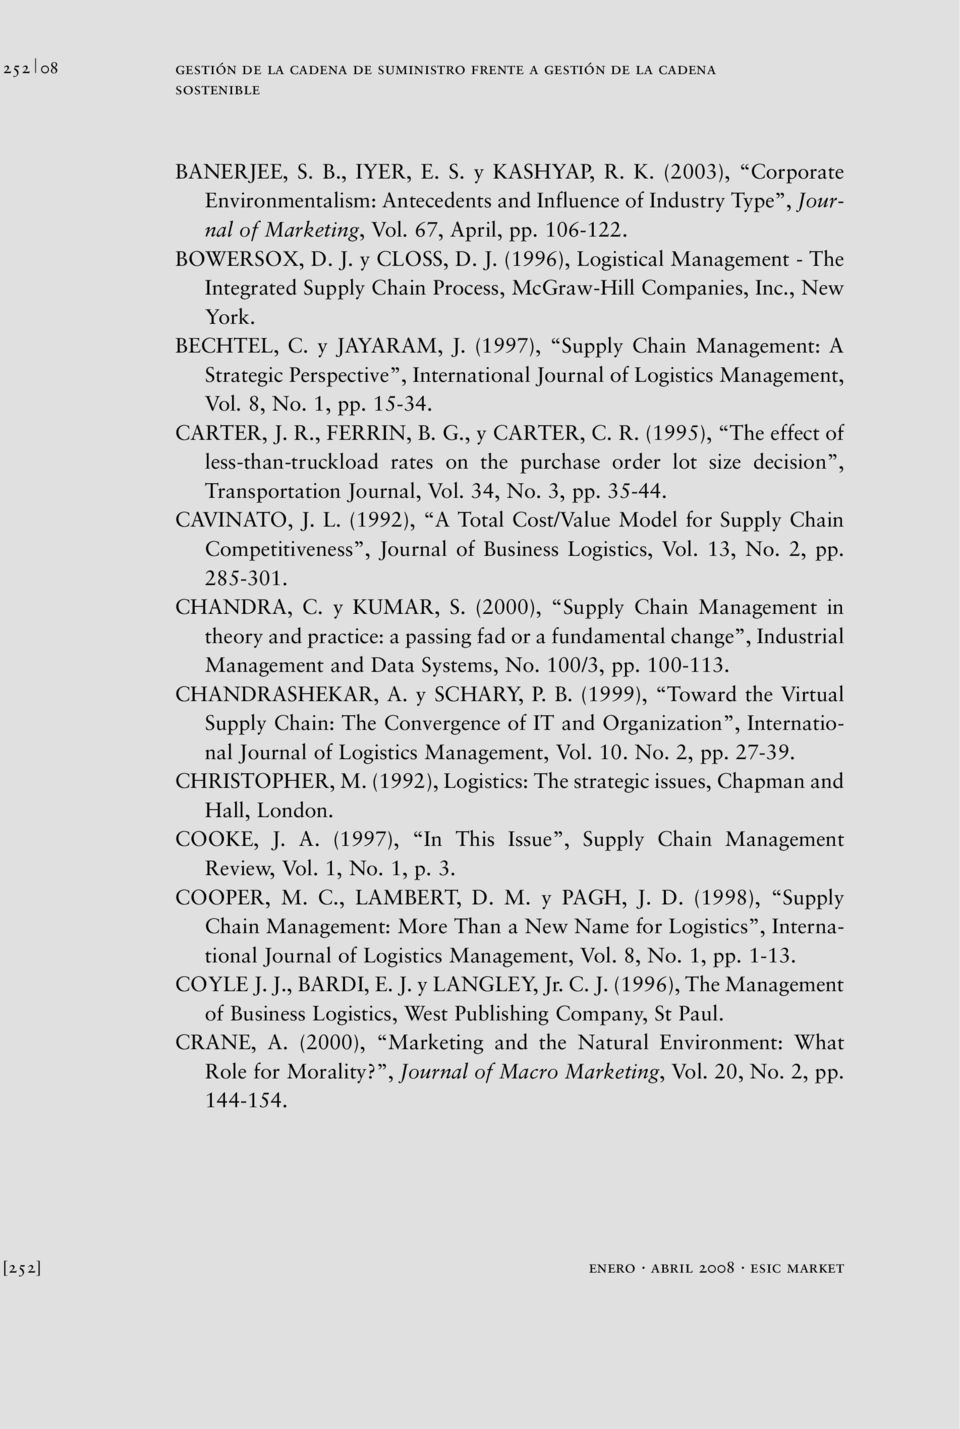 , New York. BECHTEL, C. y JAYARAM, J. (1997), Supply Chain Management: A Strategic Perspective, International Journal of Logistics Management, Vol. 8, No. 1, pp. 15-34. CARTER, J. R., FERRIN, B. G.